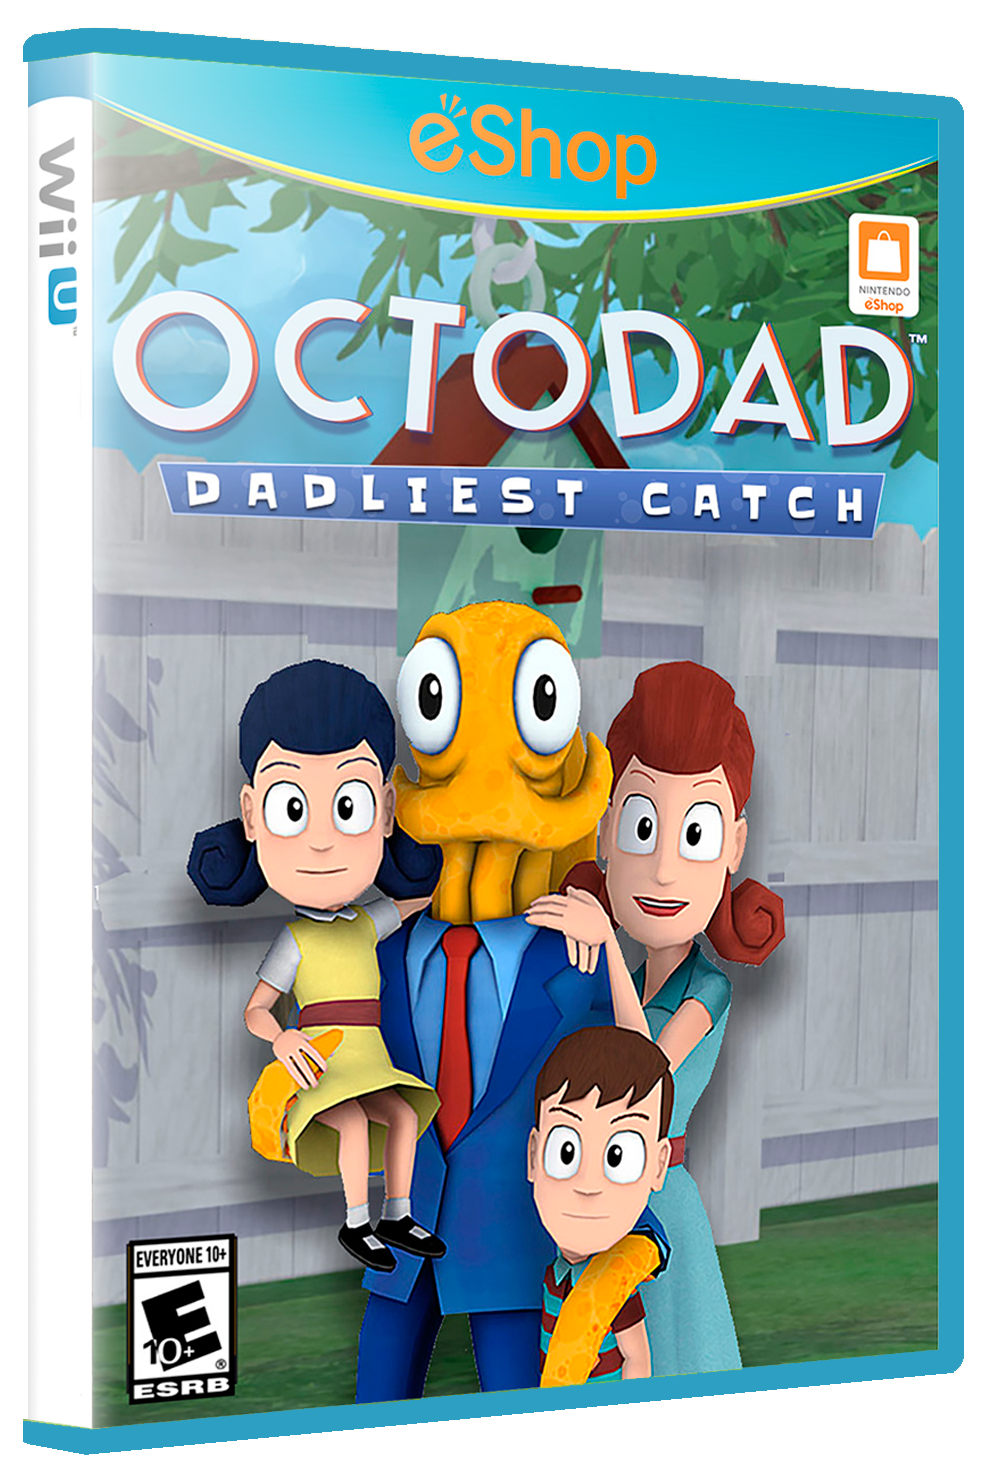 play octodad dadliest catch free